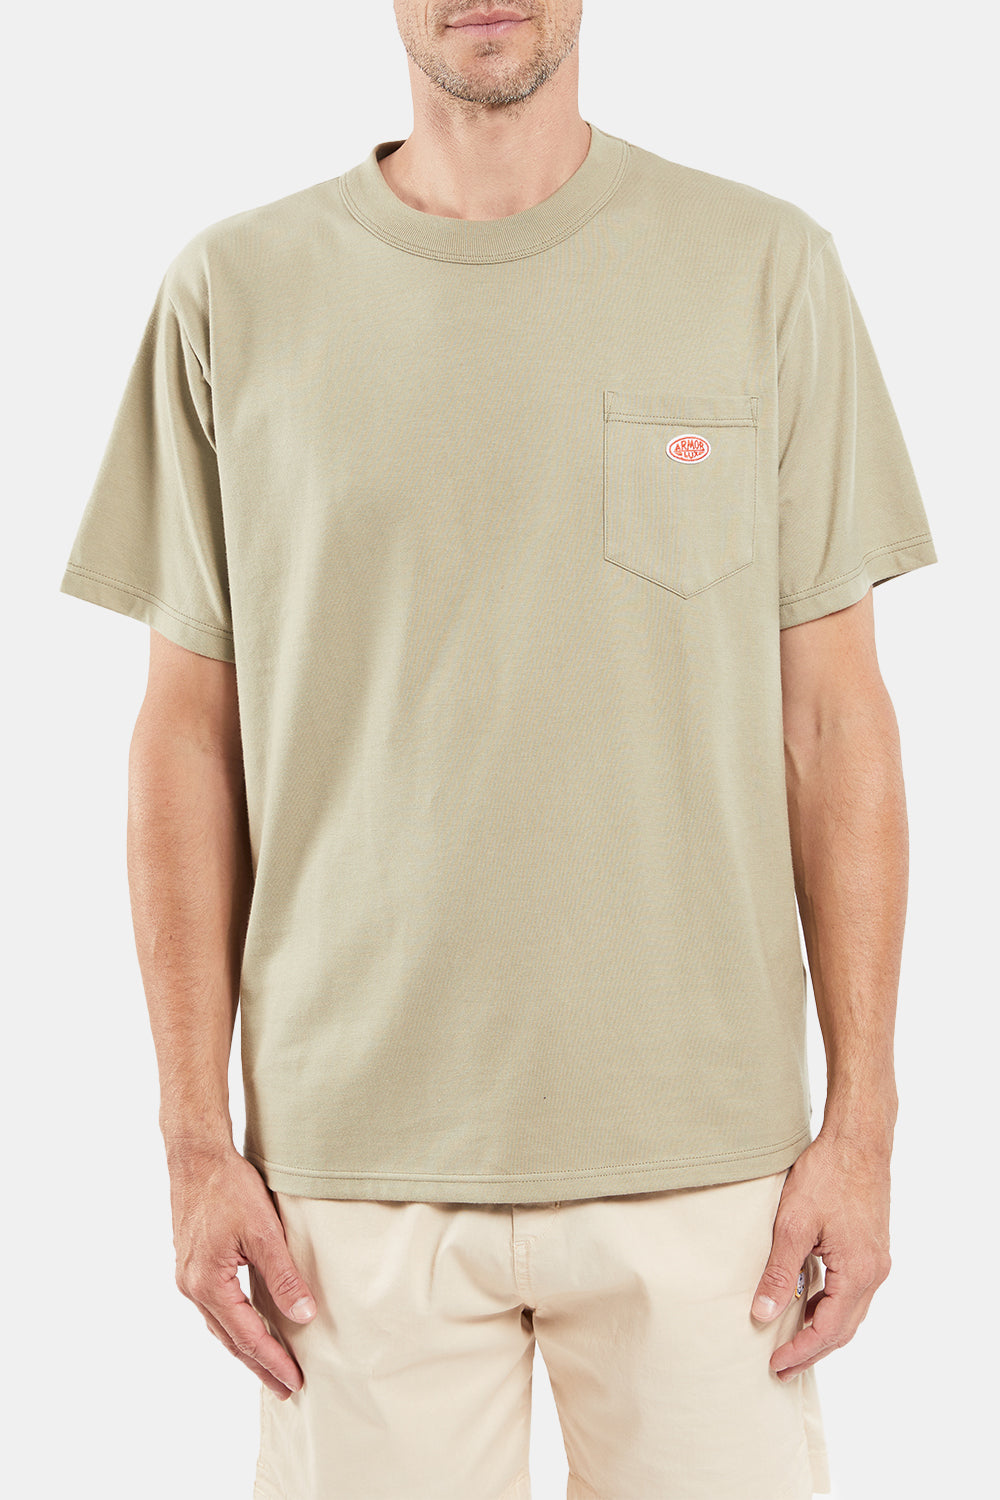 Armor Lux Heritage Organic Pocket T-Shirt (Argile)